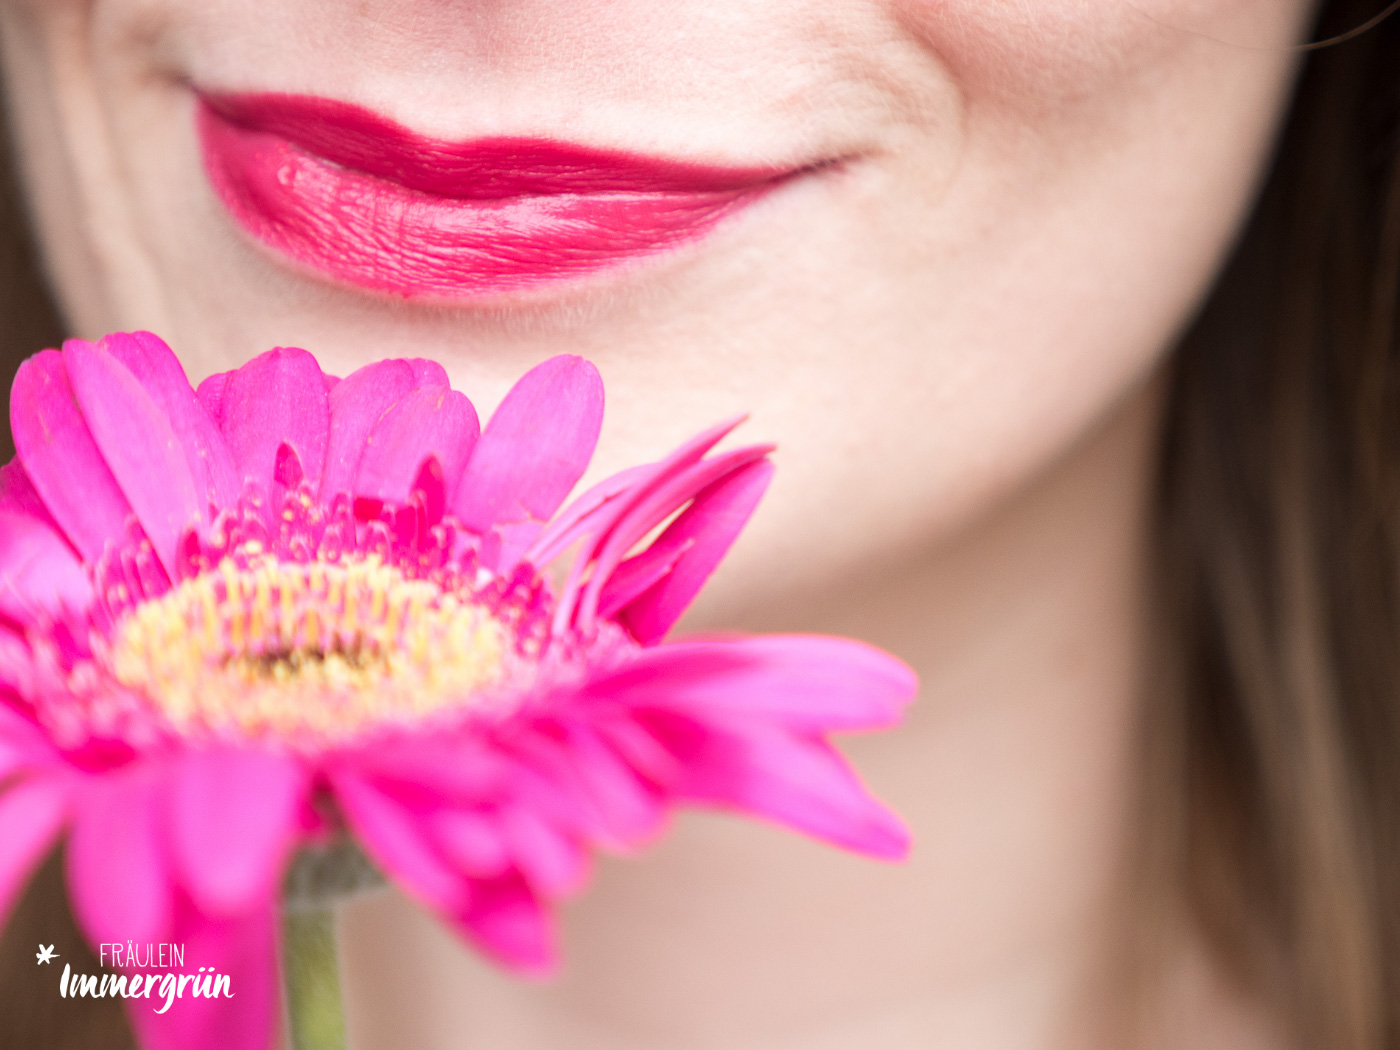 100 Percent Pure natuerlicher Lippenstift: Tragefoto von Pomegranate Oil Anti Aging Lipstick Narcissus. Vegane Naturkosmetik.